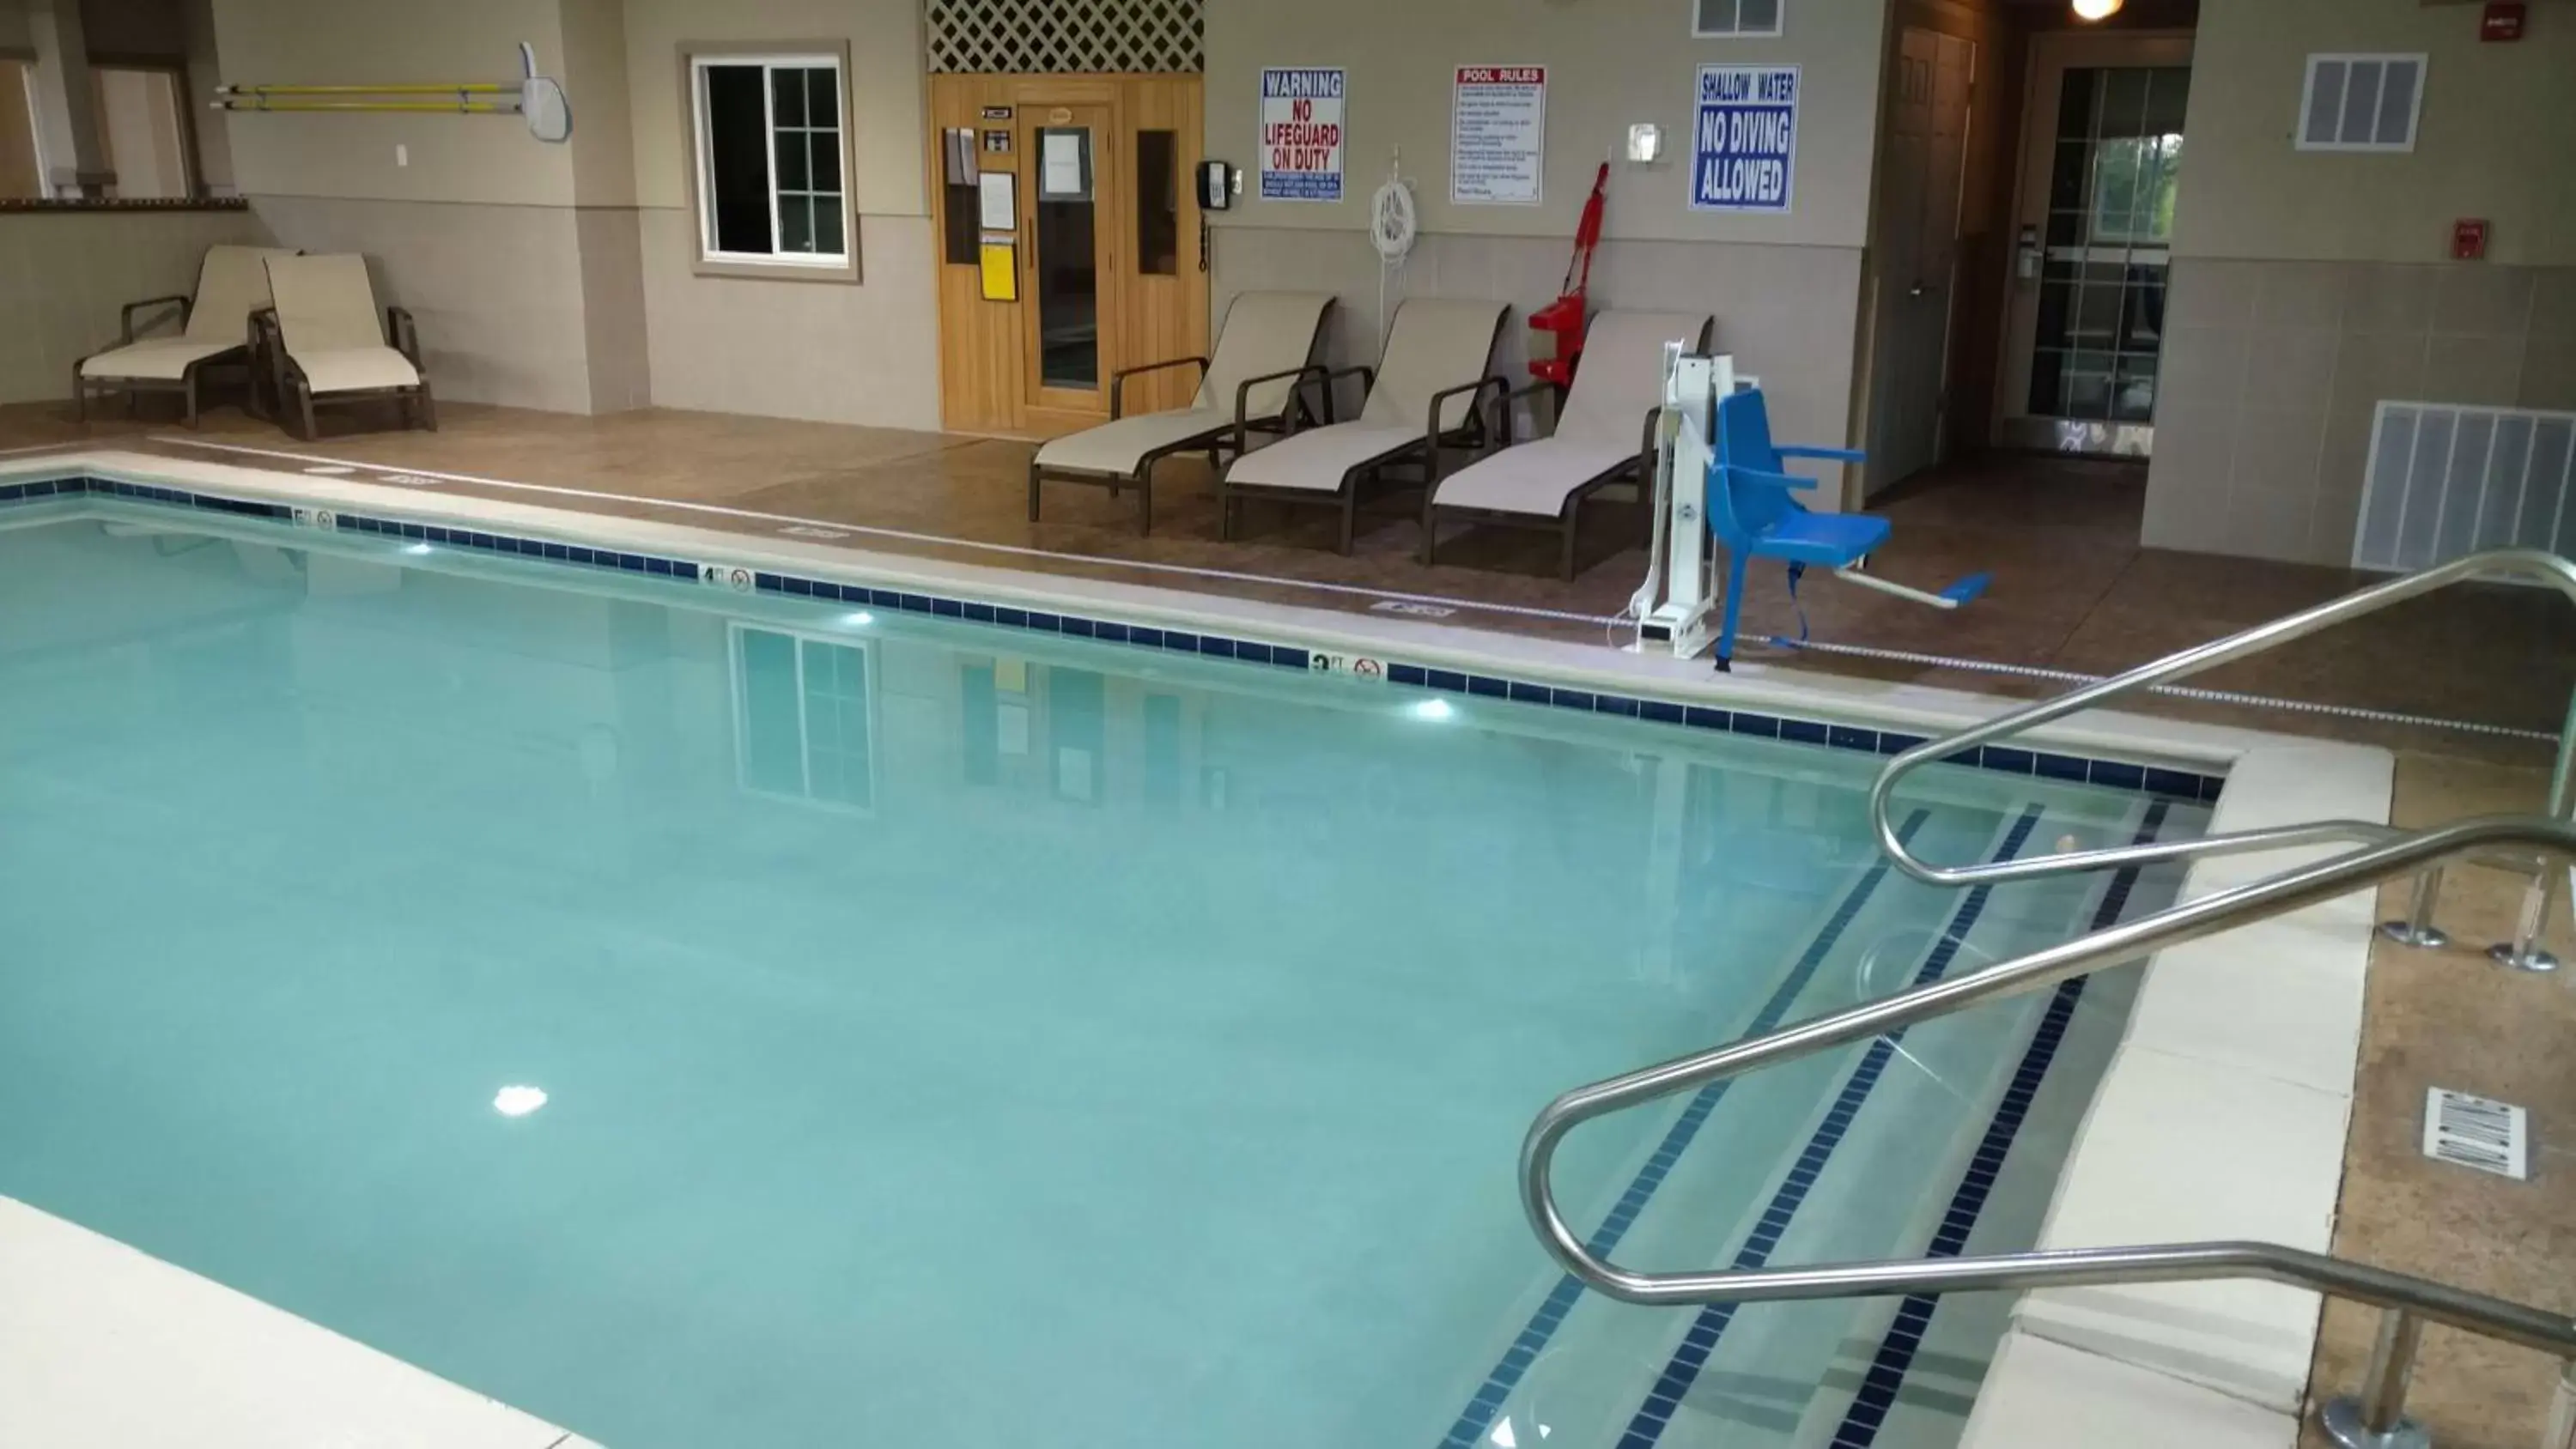 On site, Swimming Pool in Best Western Plus Crawfordsville Hotel